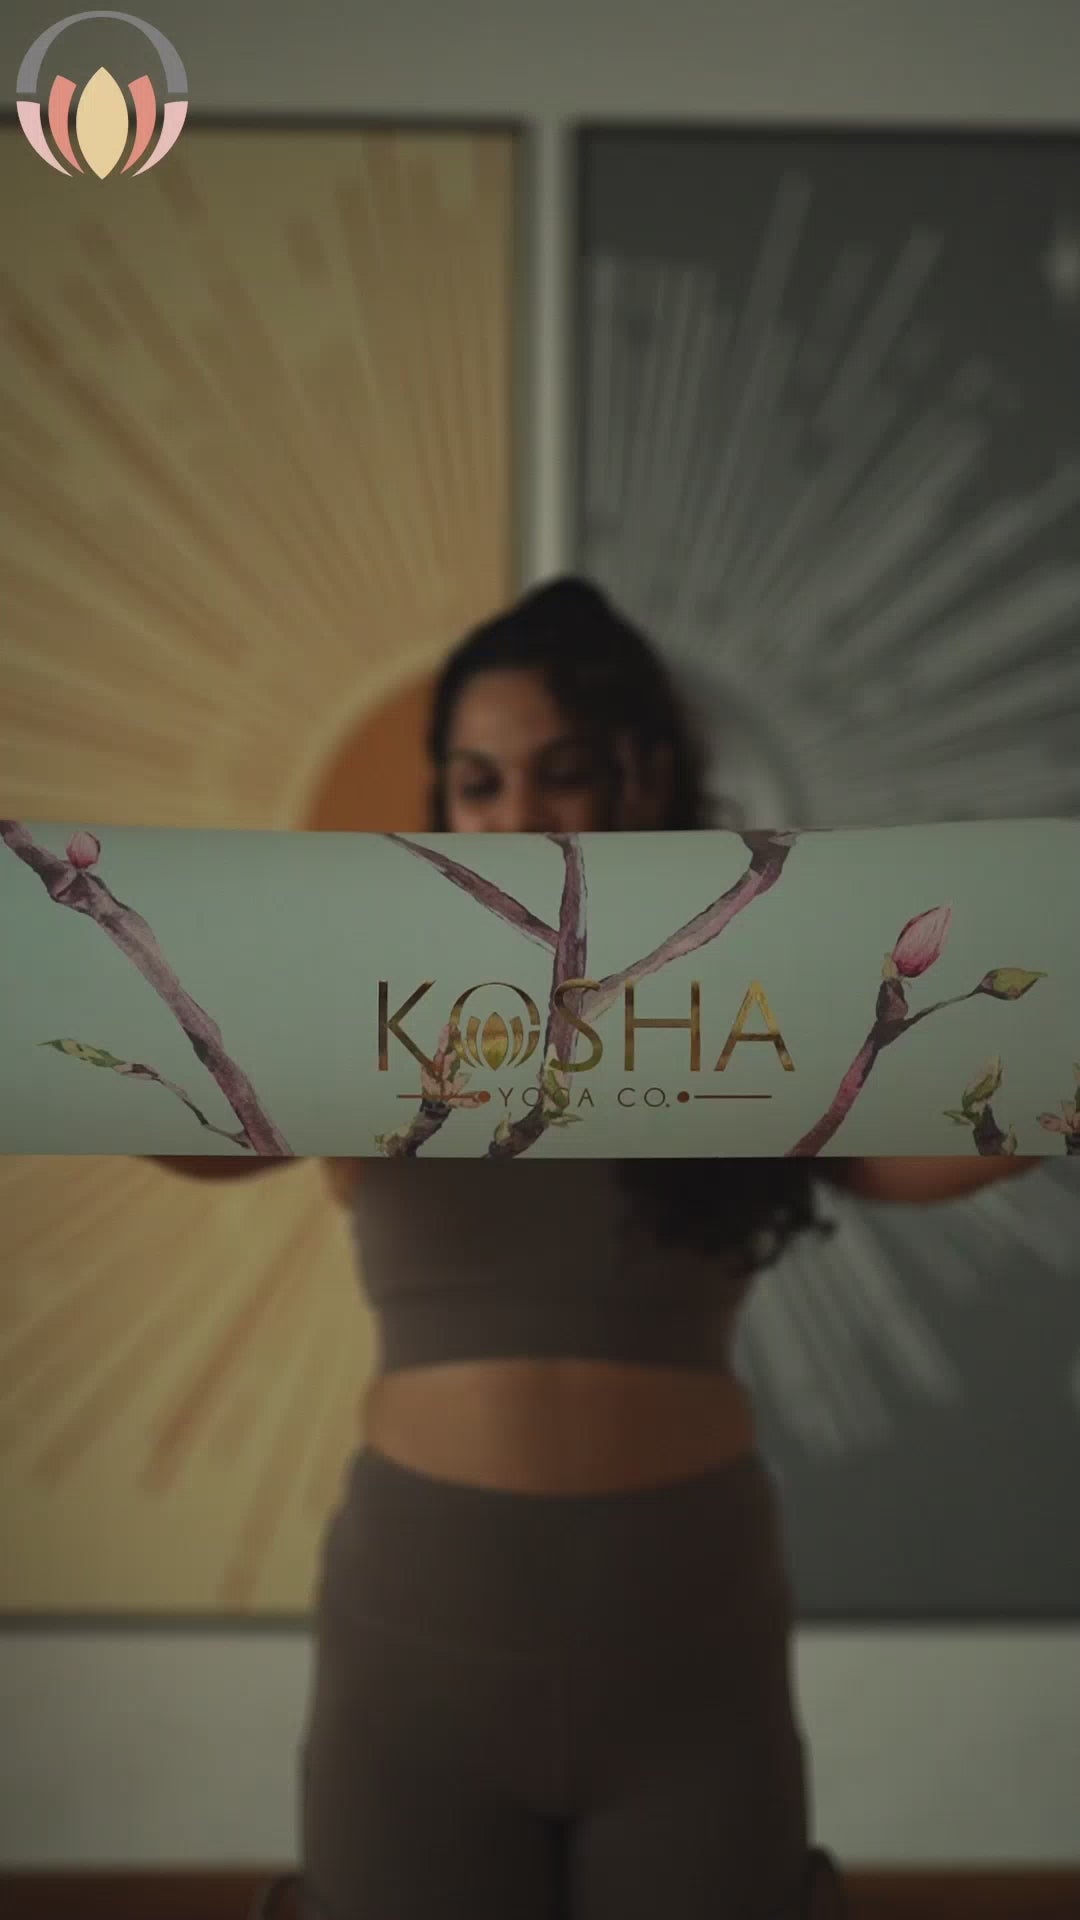 kosha yoga's pure couture yoga mats